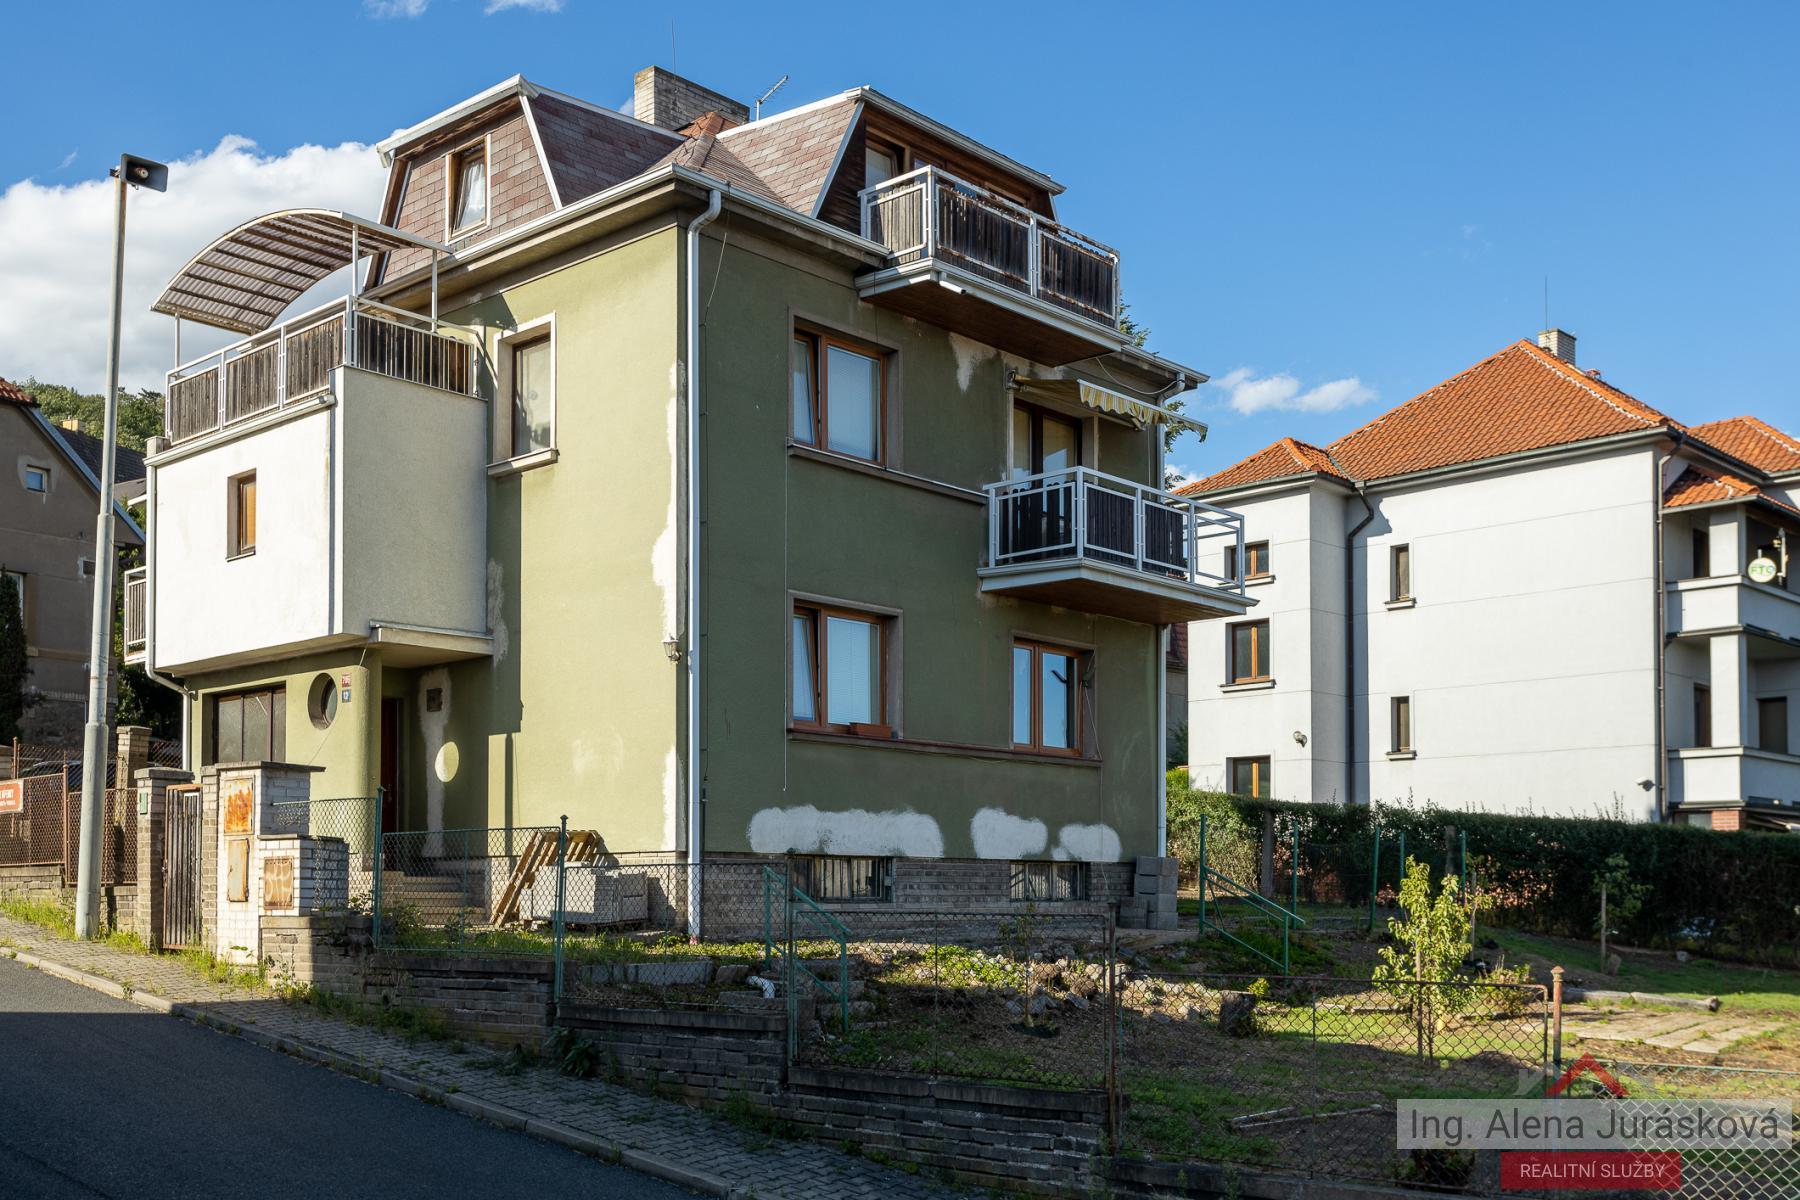 Rodinný dům se třemi byty a zahradou 585 m2, U Vápenky, Praha 5, Radotín